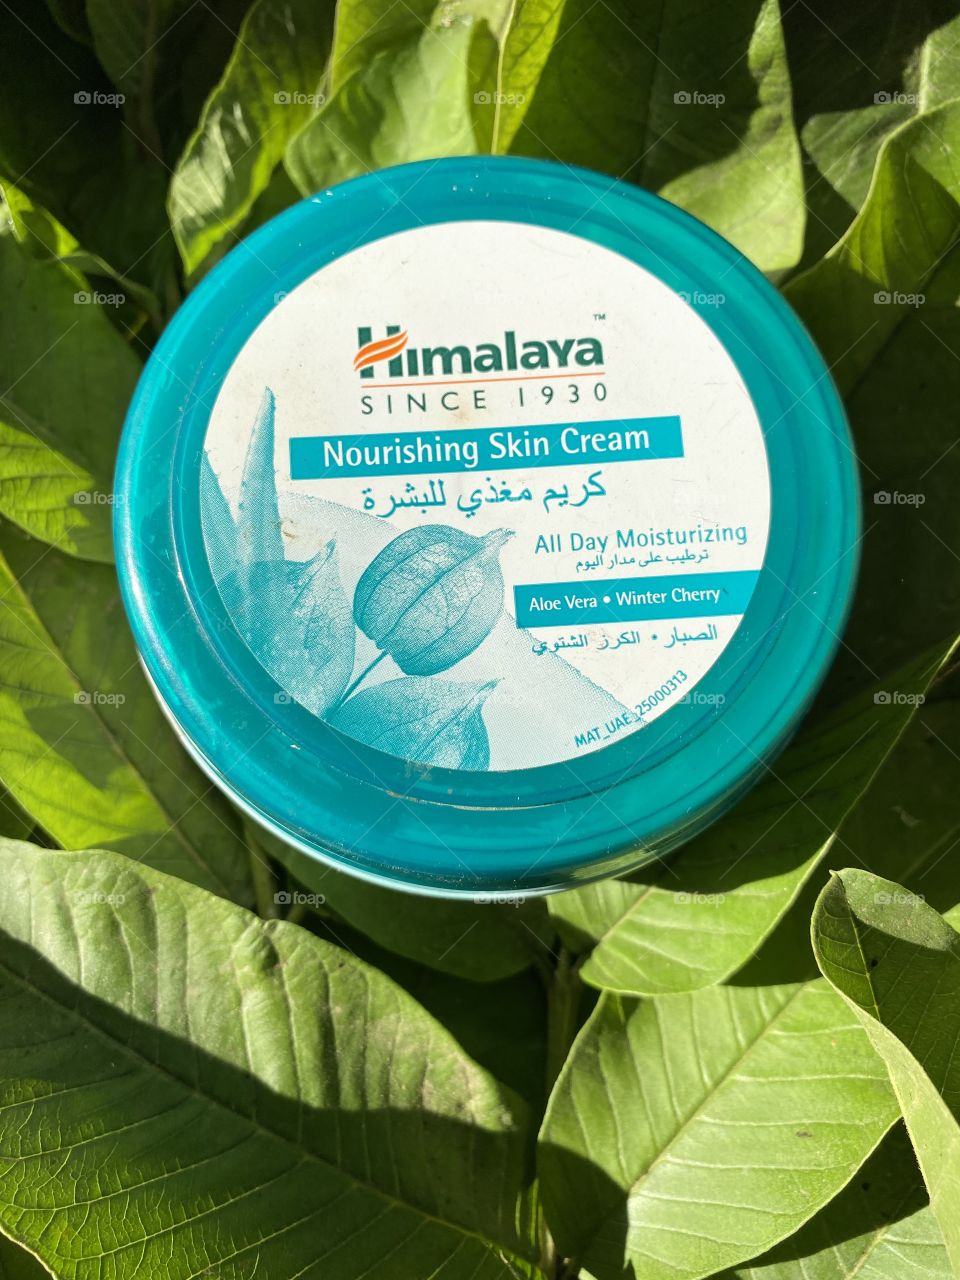 Skin care, nourishing and moisturizing with Himalaya cream